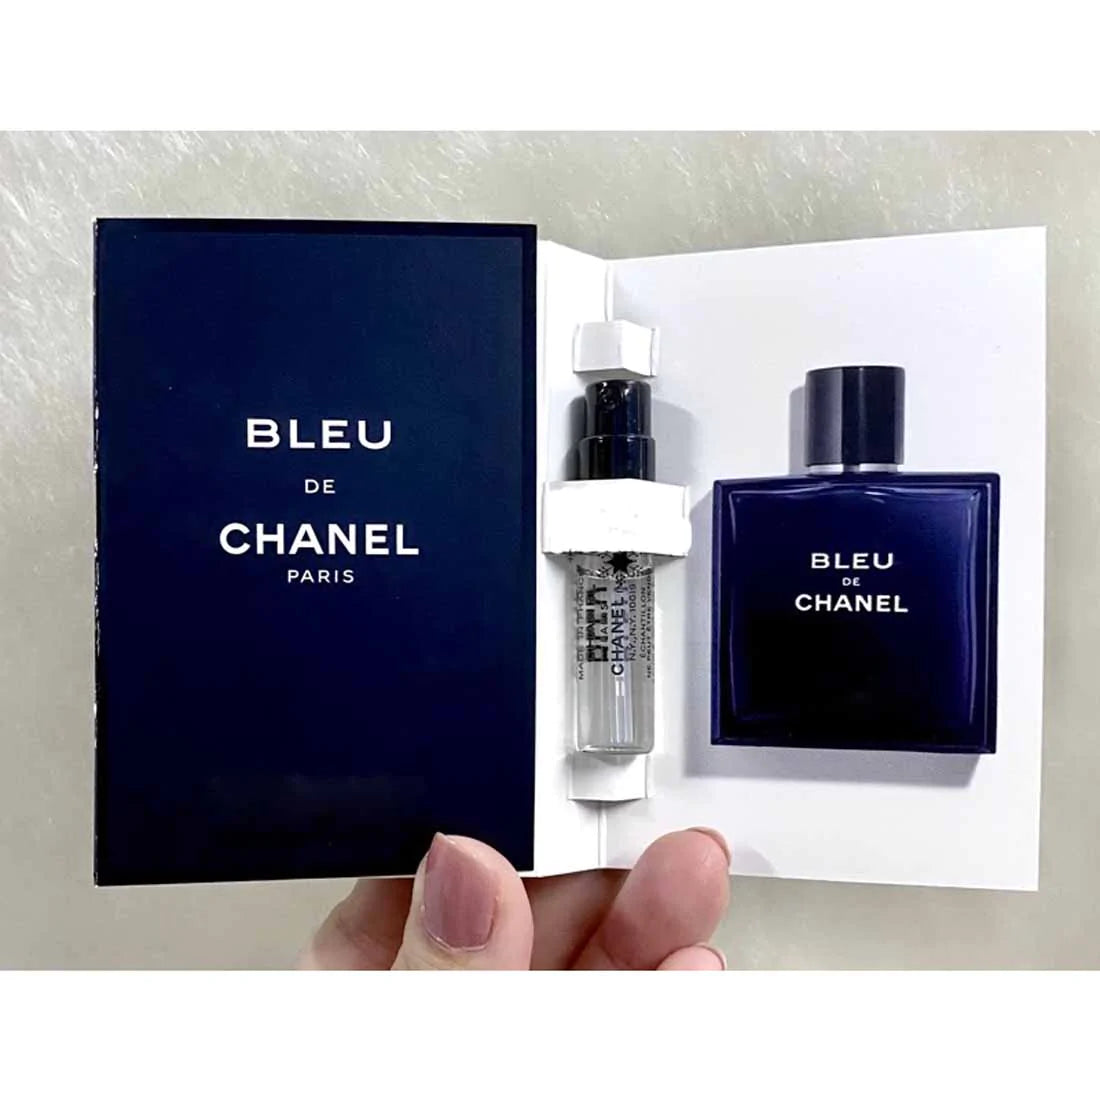 bleu de chanel parfum small